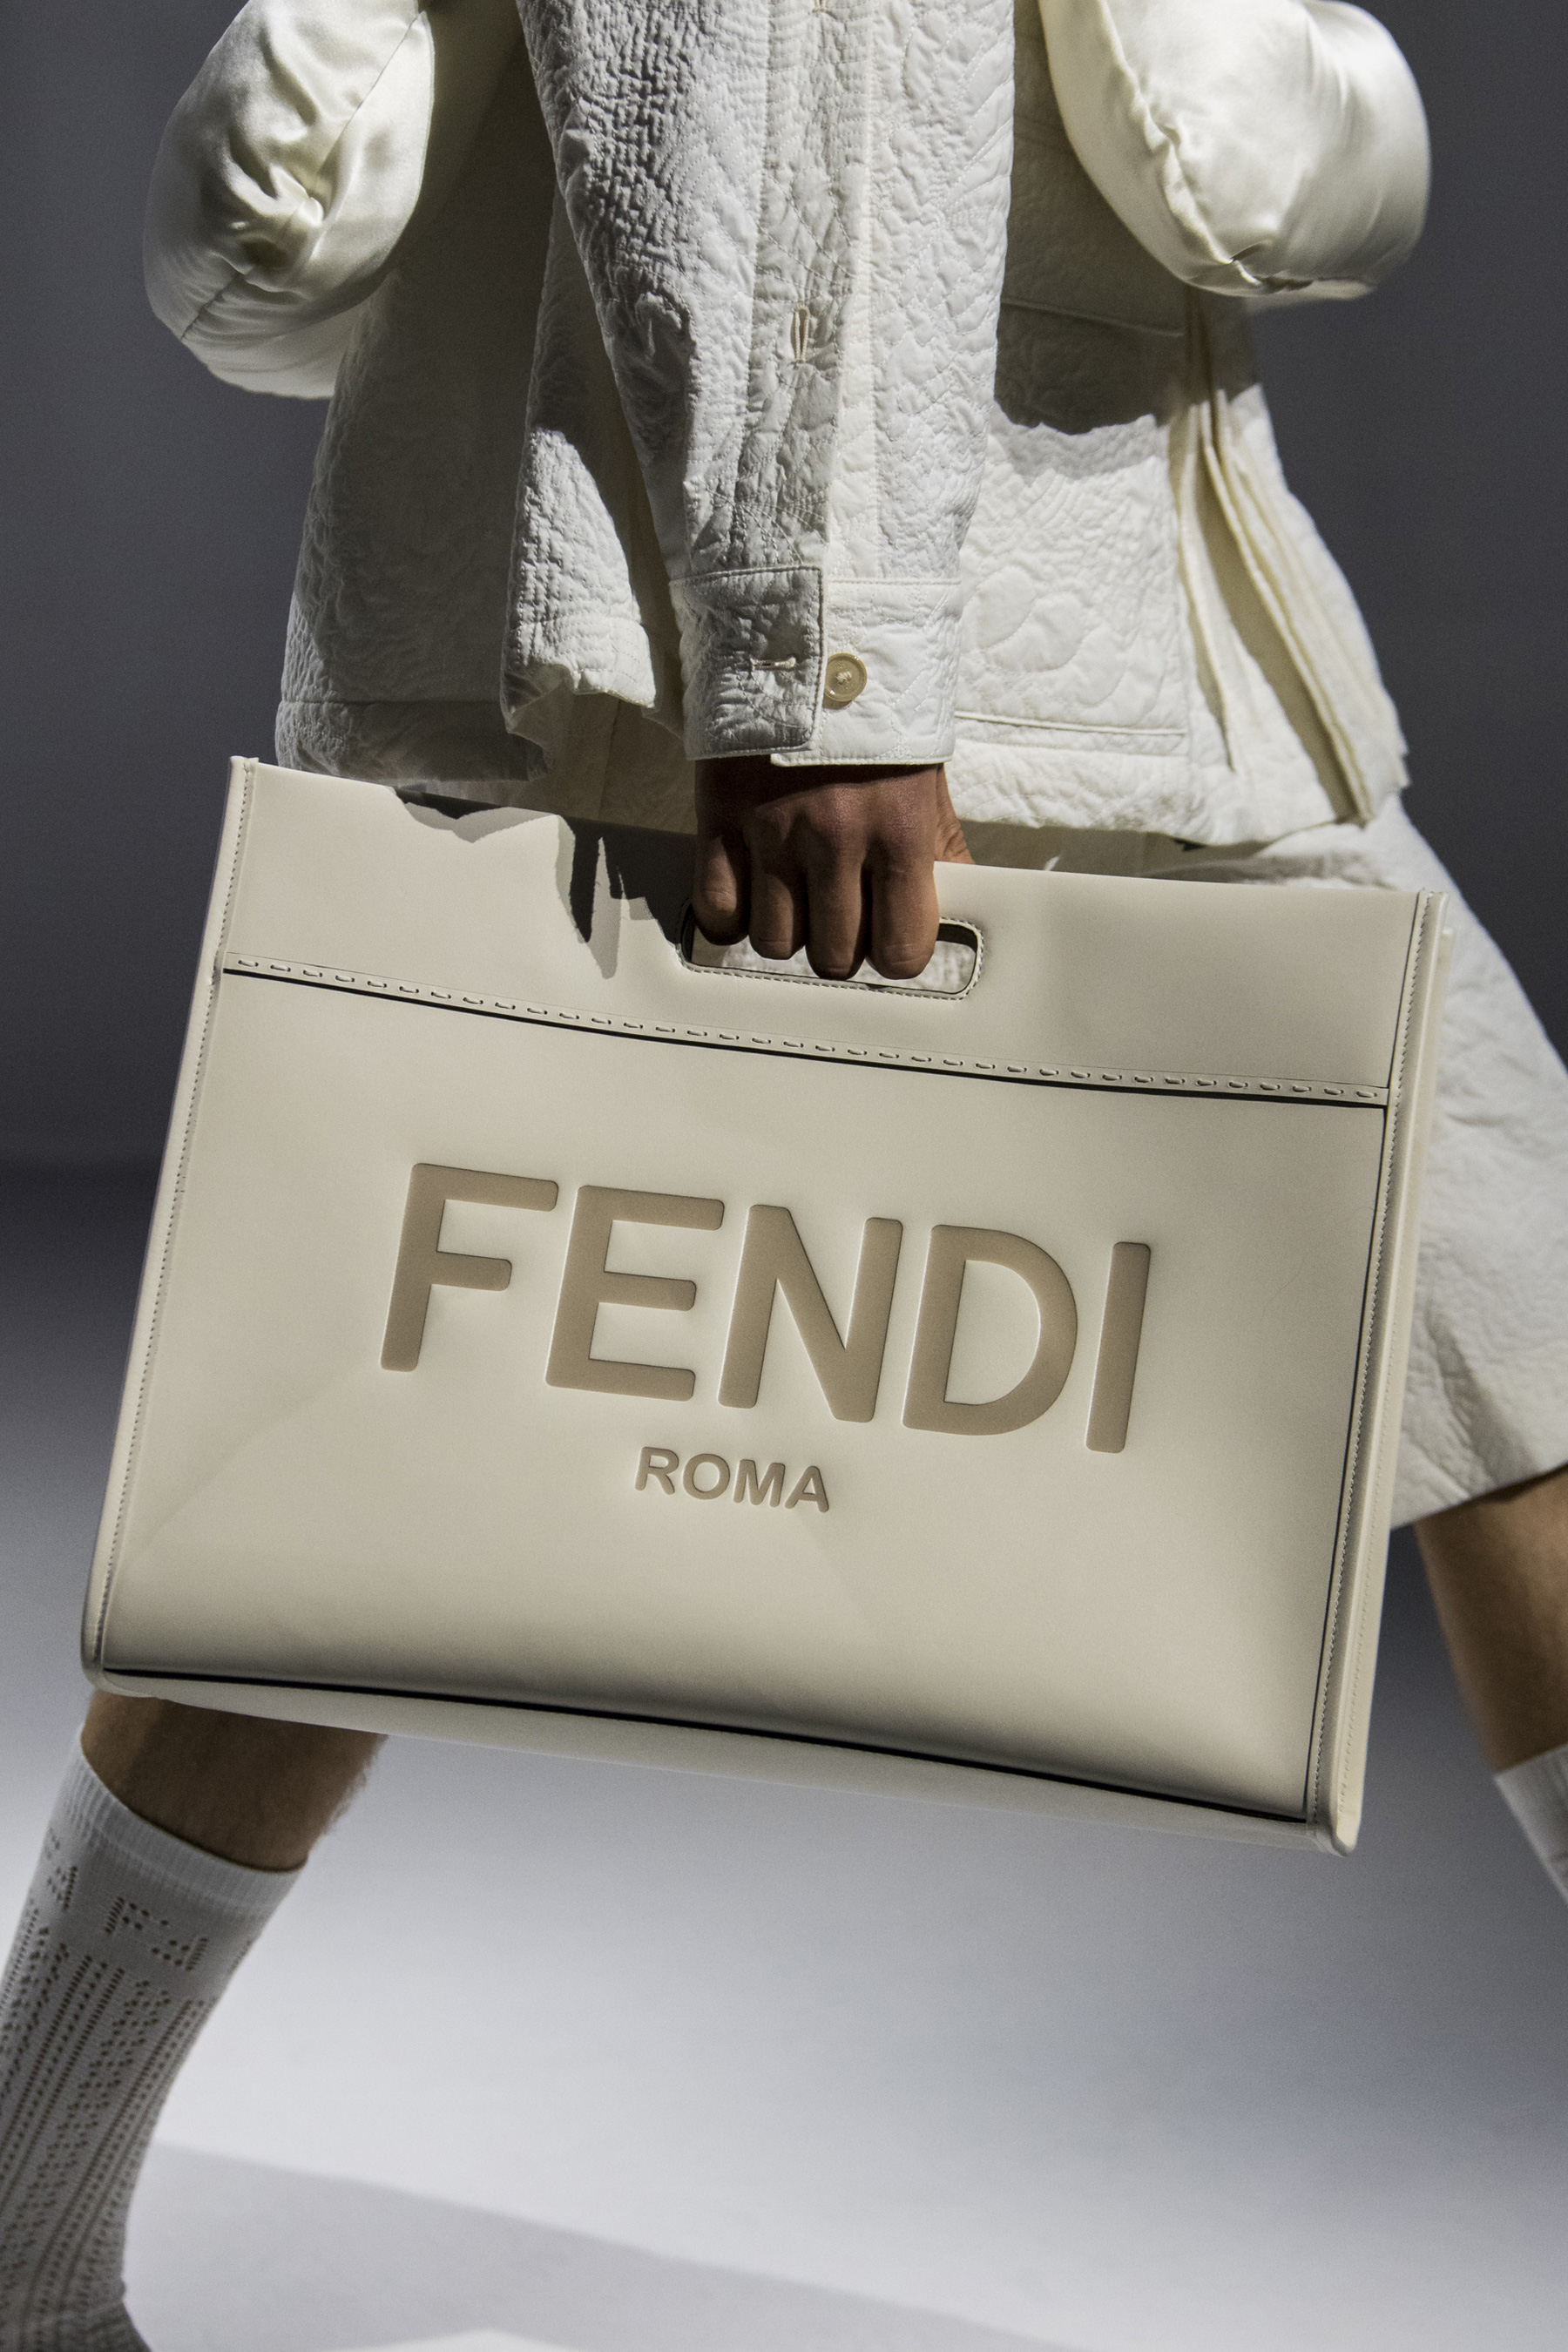 Fendi Spring 2021 Fashion Show Details | The Impression